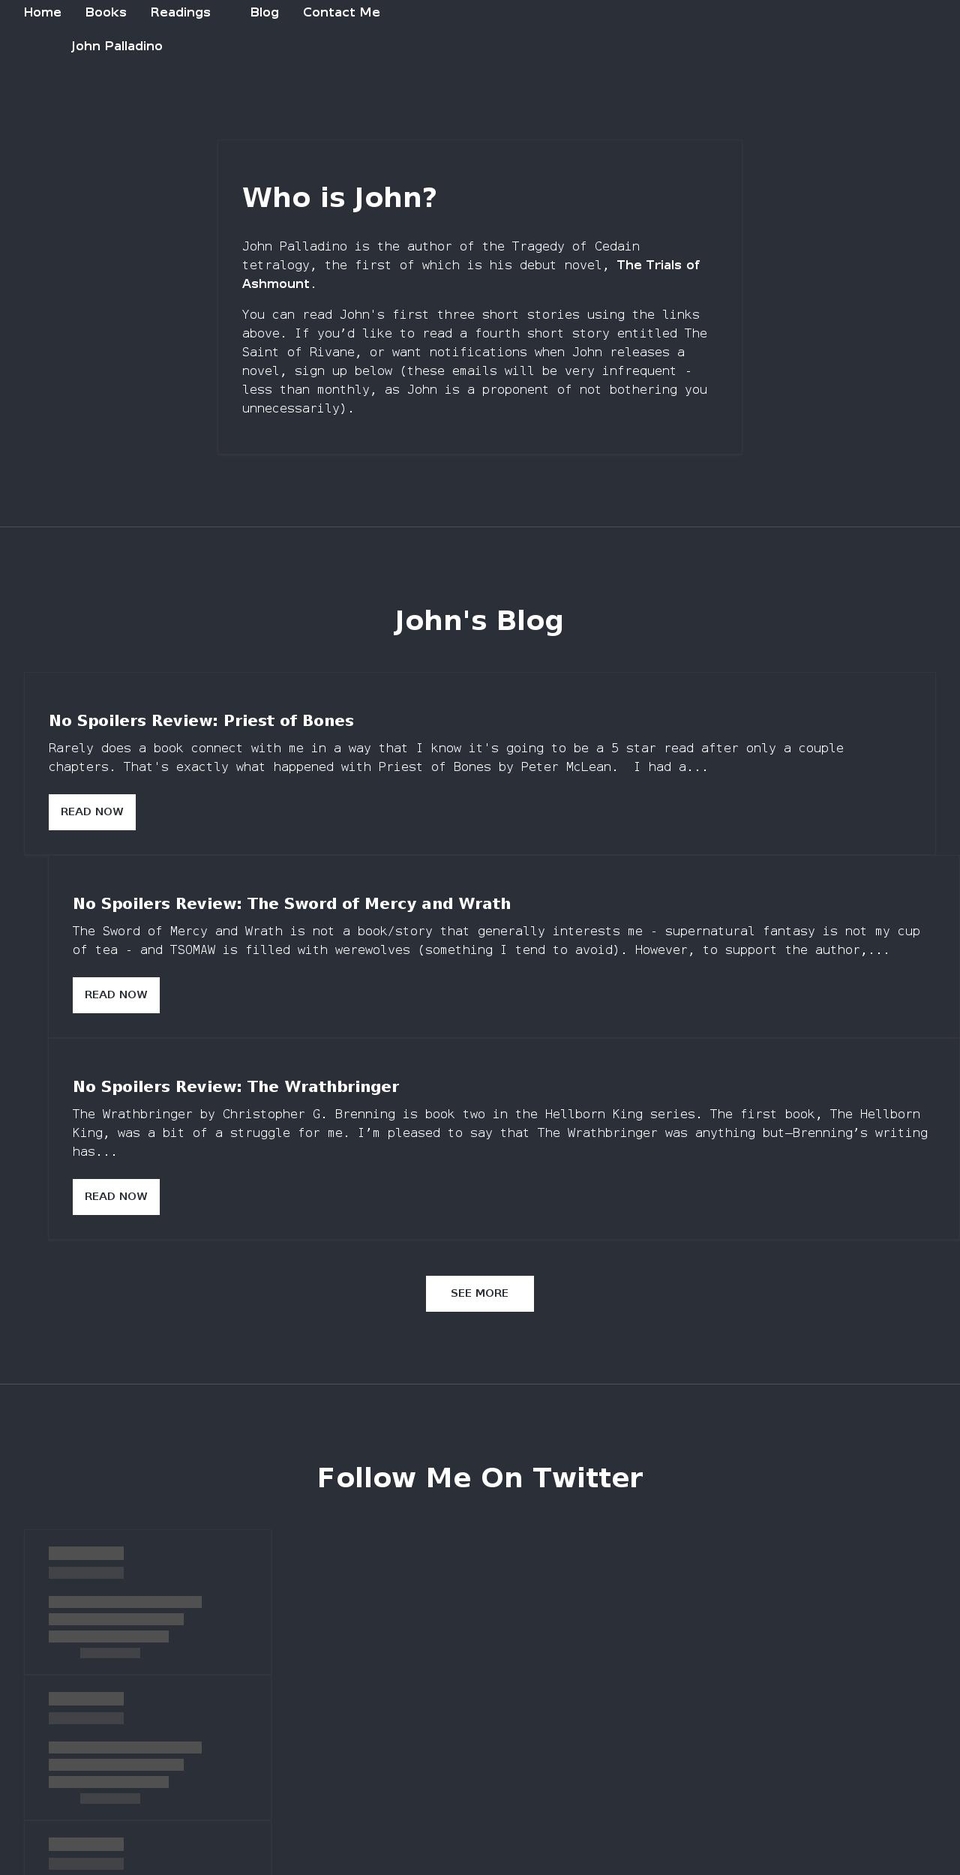 johnpalladino.com shopify website screenshot